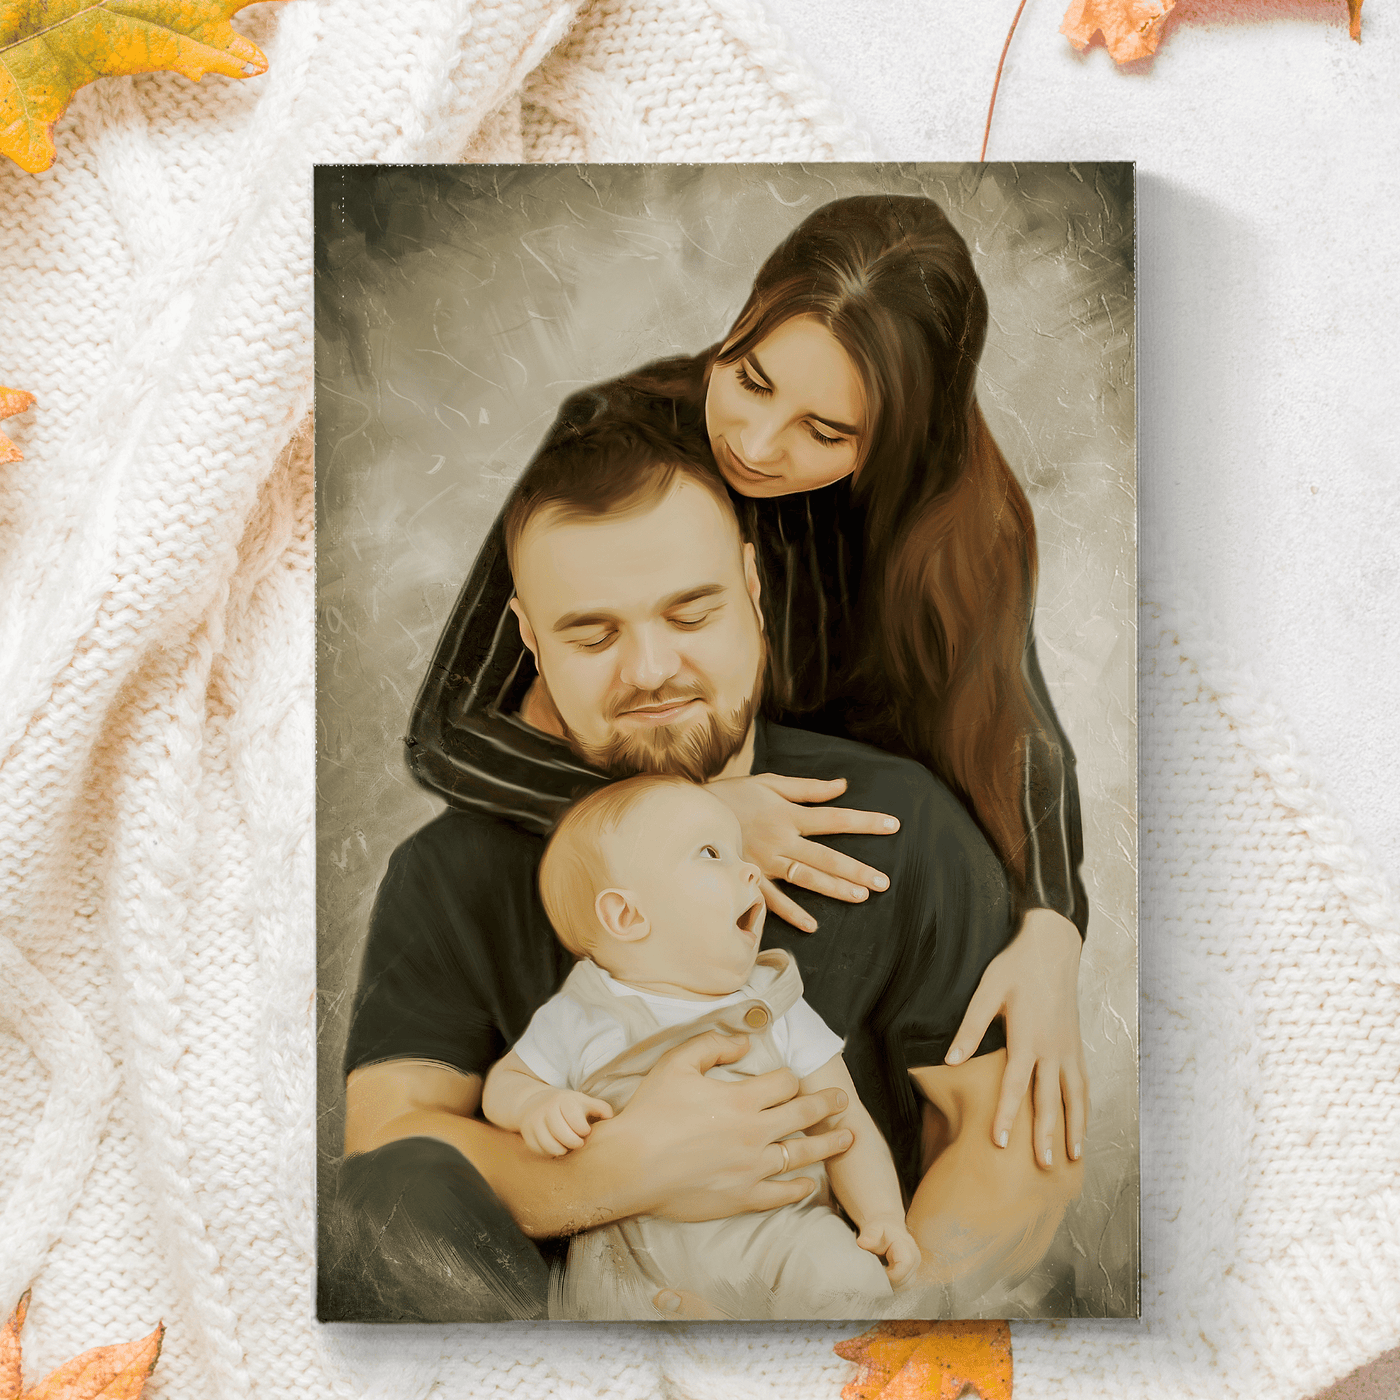 acrylic baby portrait of a happy family